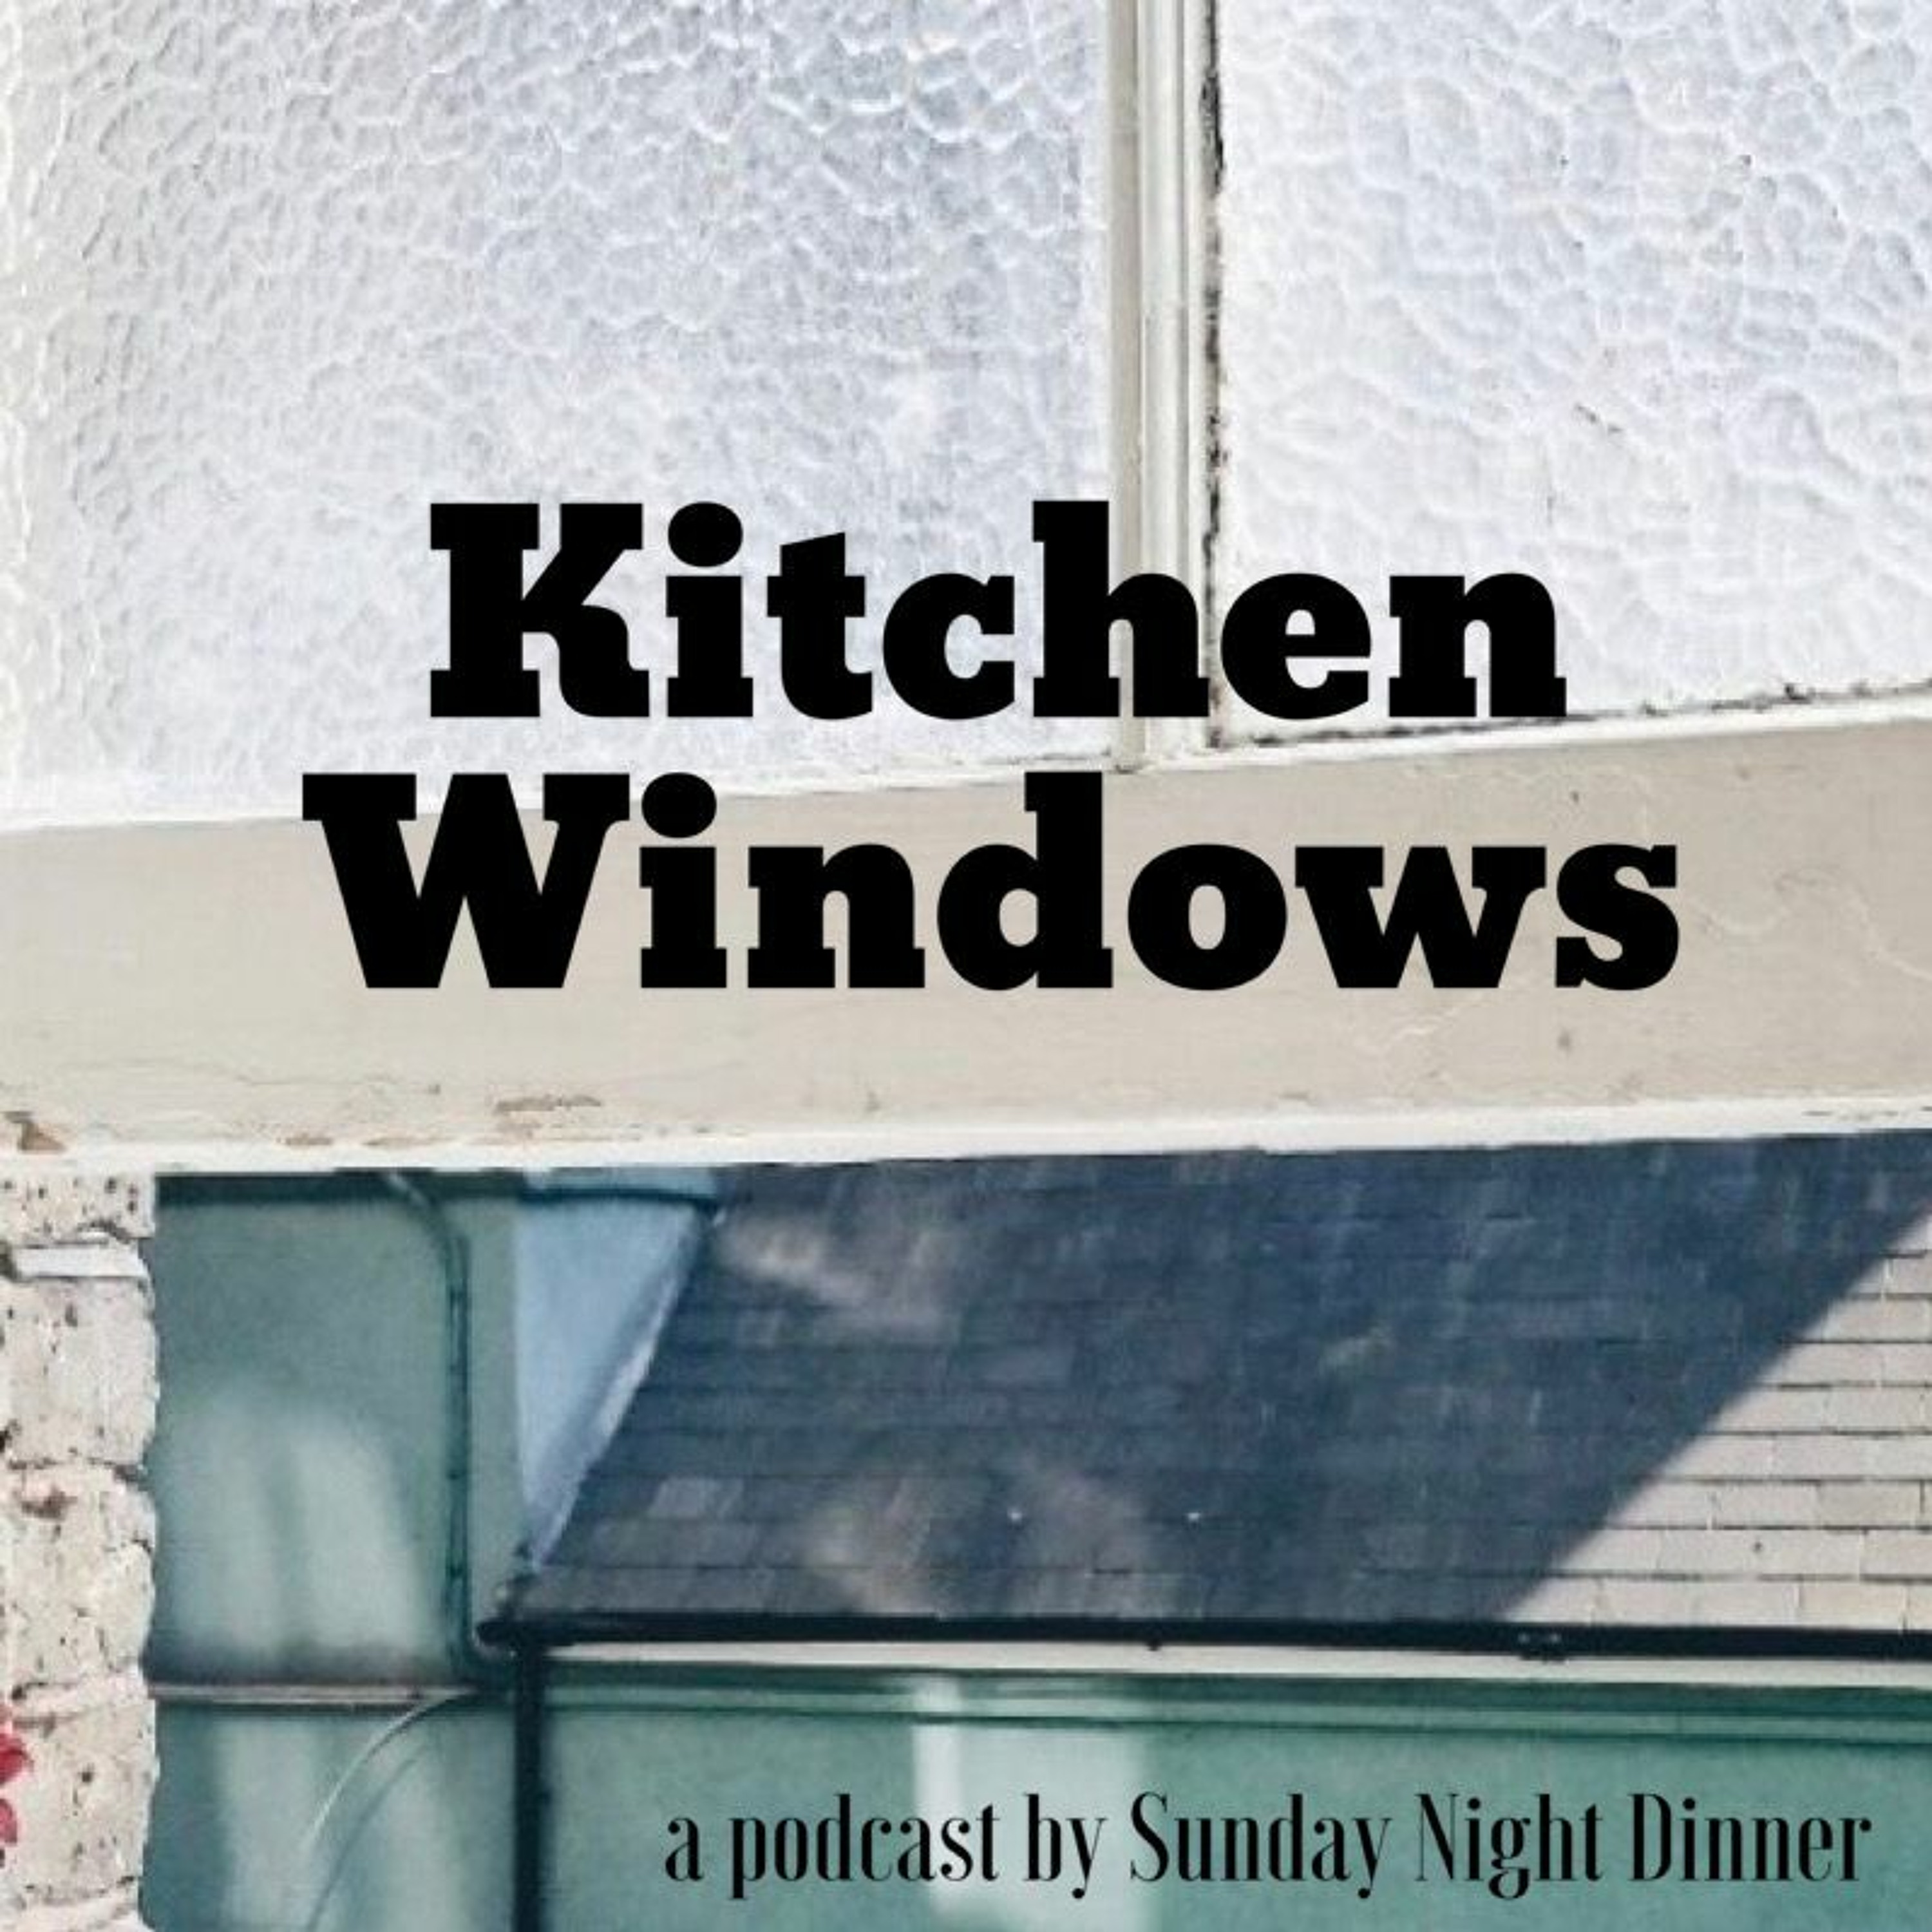 Kitchen Windows: Miriam Toews, writer